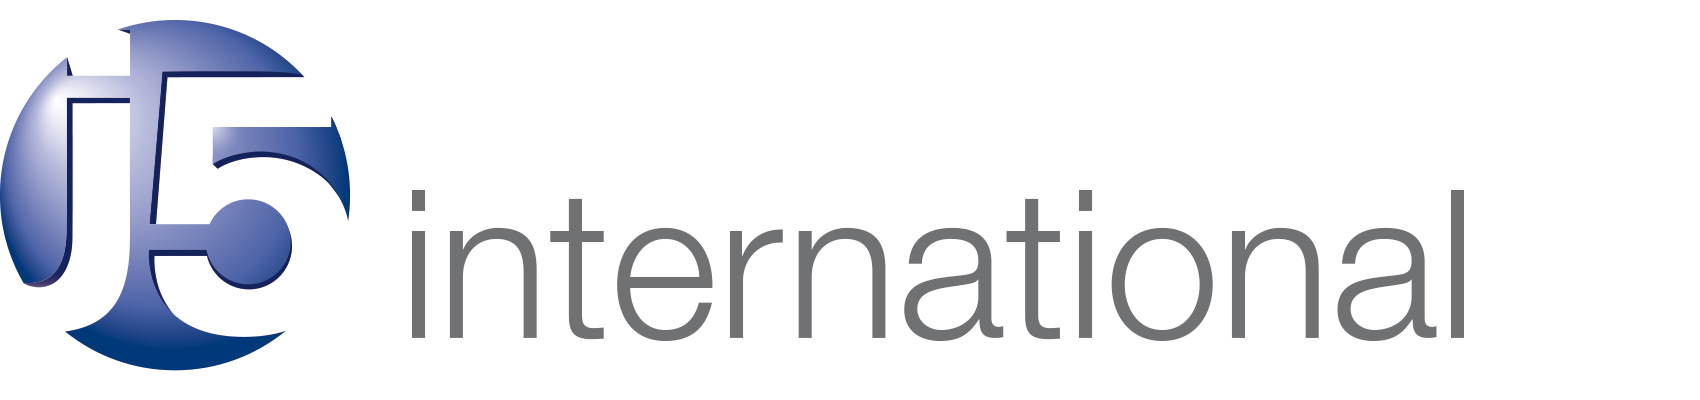 j5 International Limited Logo